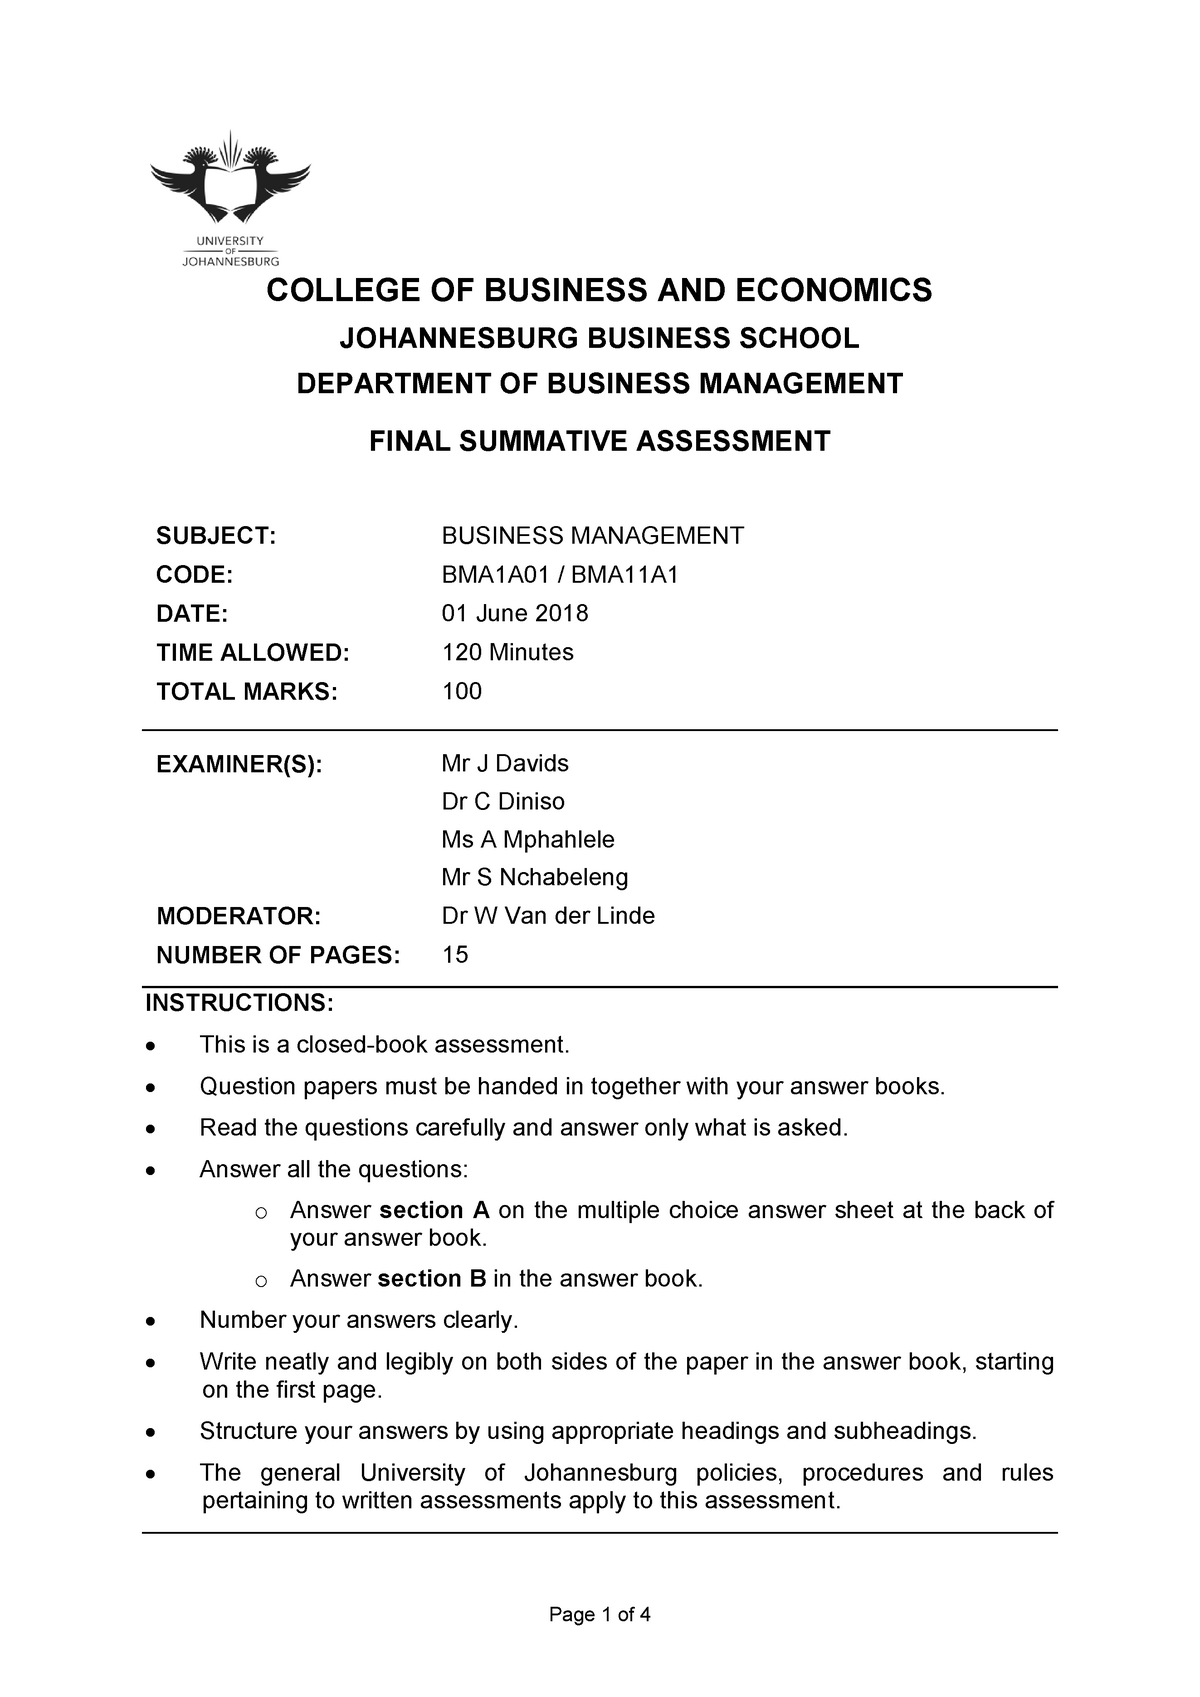 dissertation questions for business management